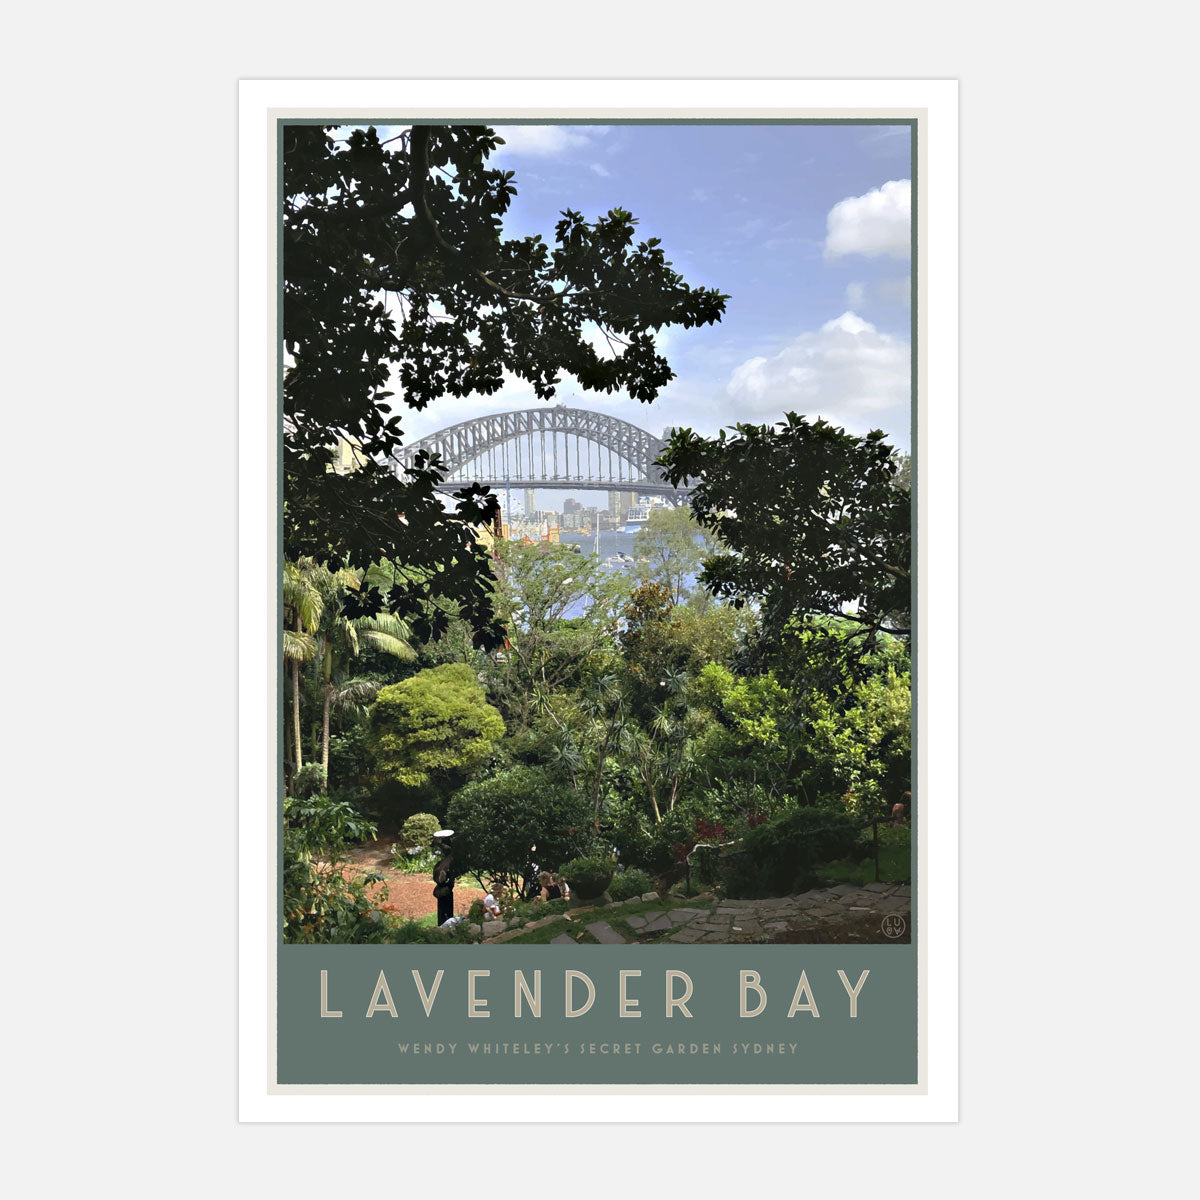 Lavender Bay vintage style travel oak framed print by places we luv